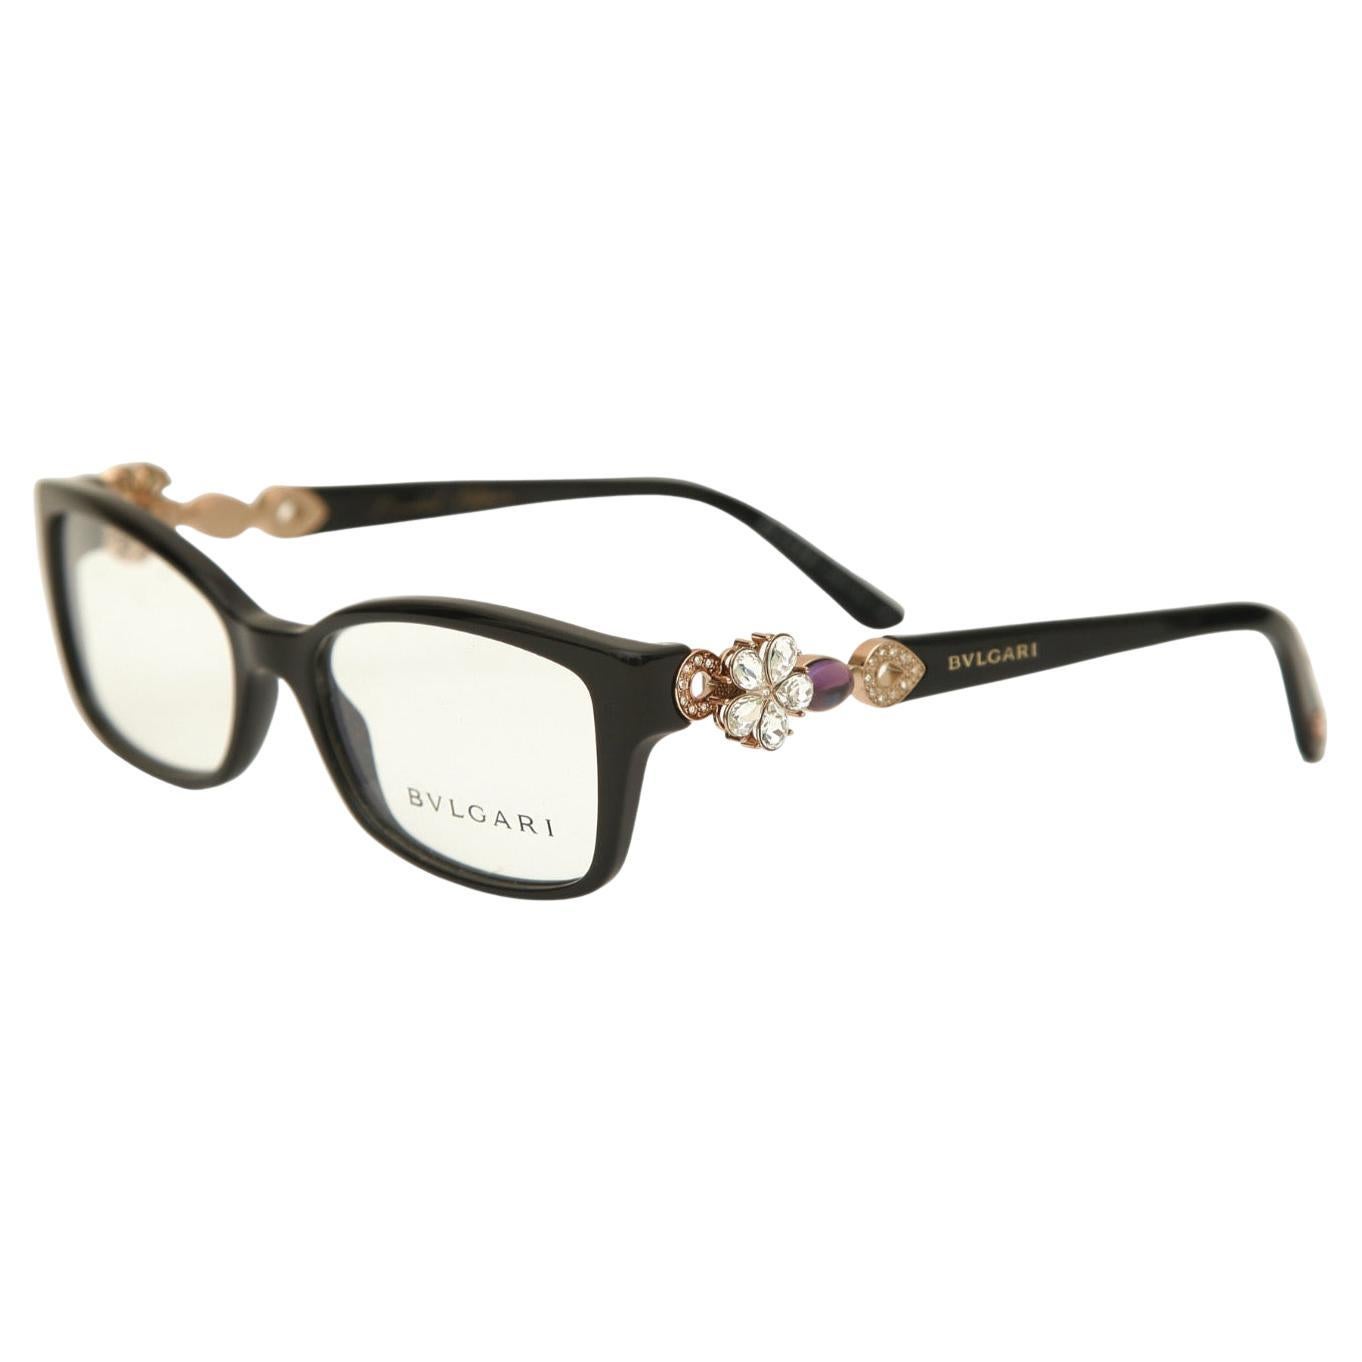 BVLGARI Black Eyeglass Frames 4058b 501 Sunglass Frames Gold HW Crystals LTD NEW For Sale